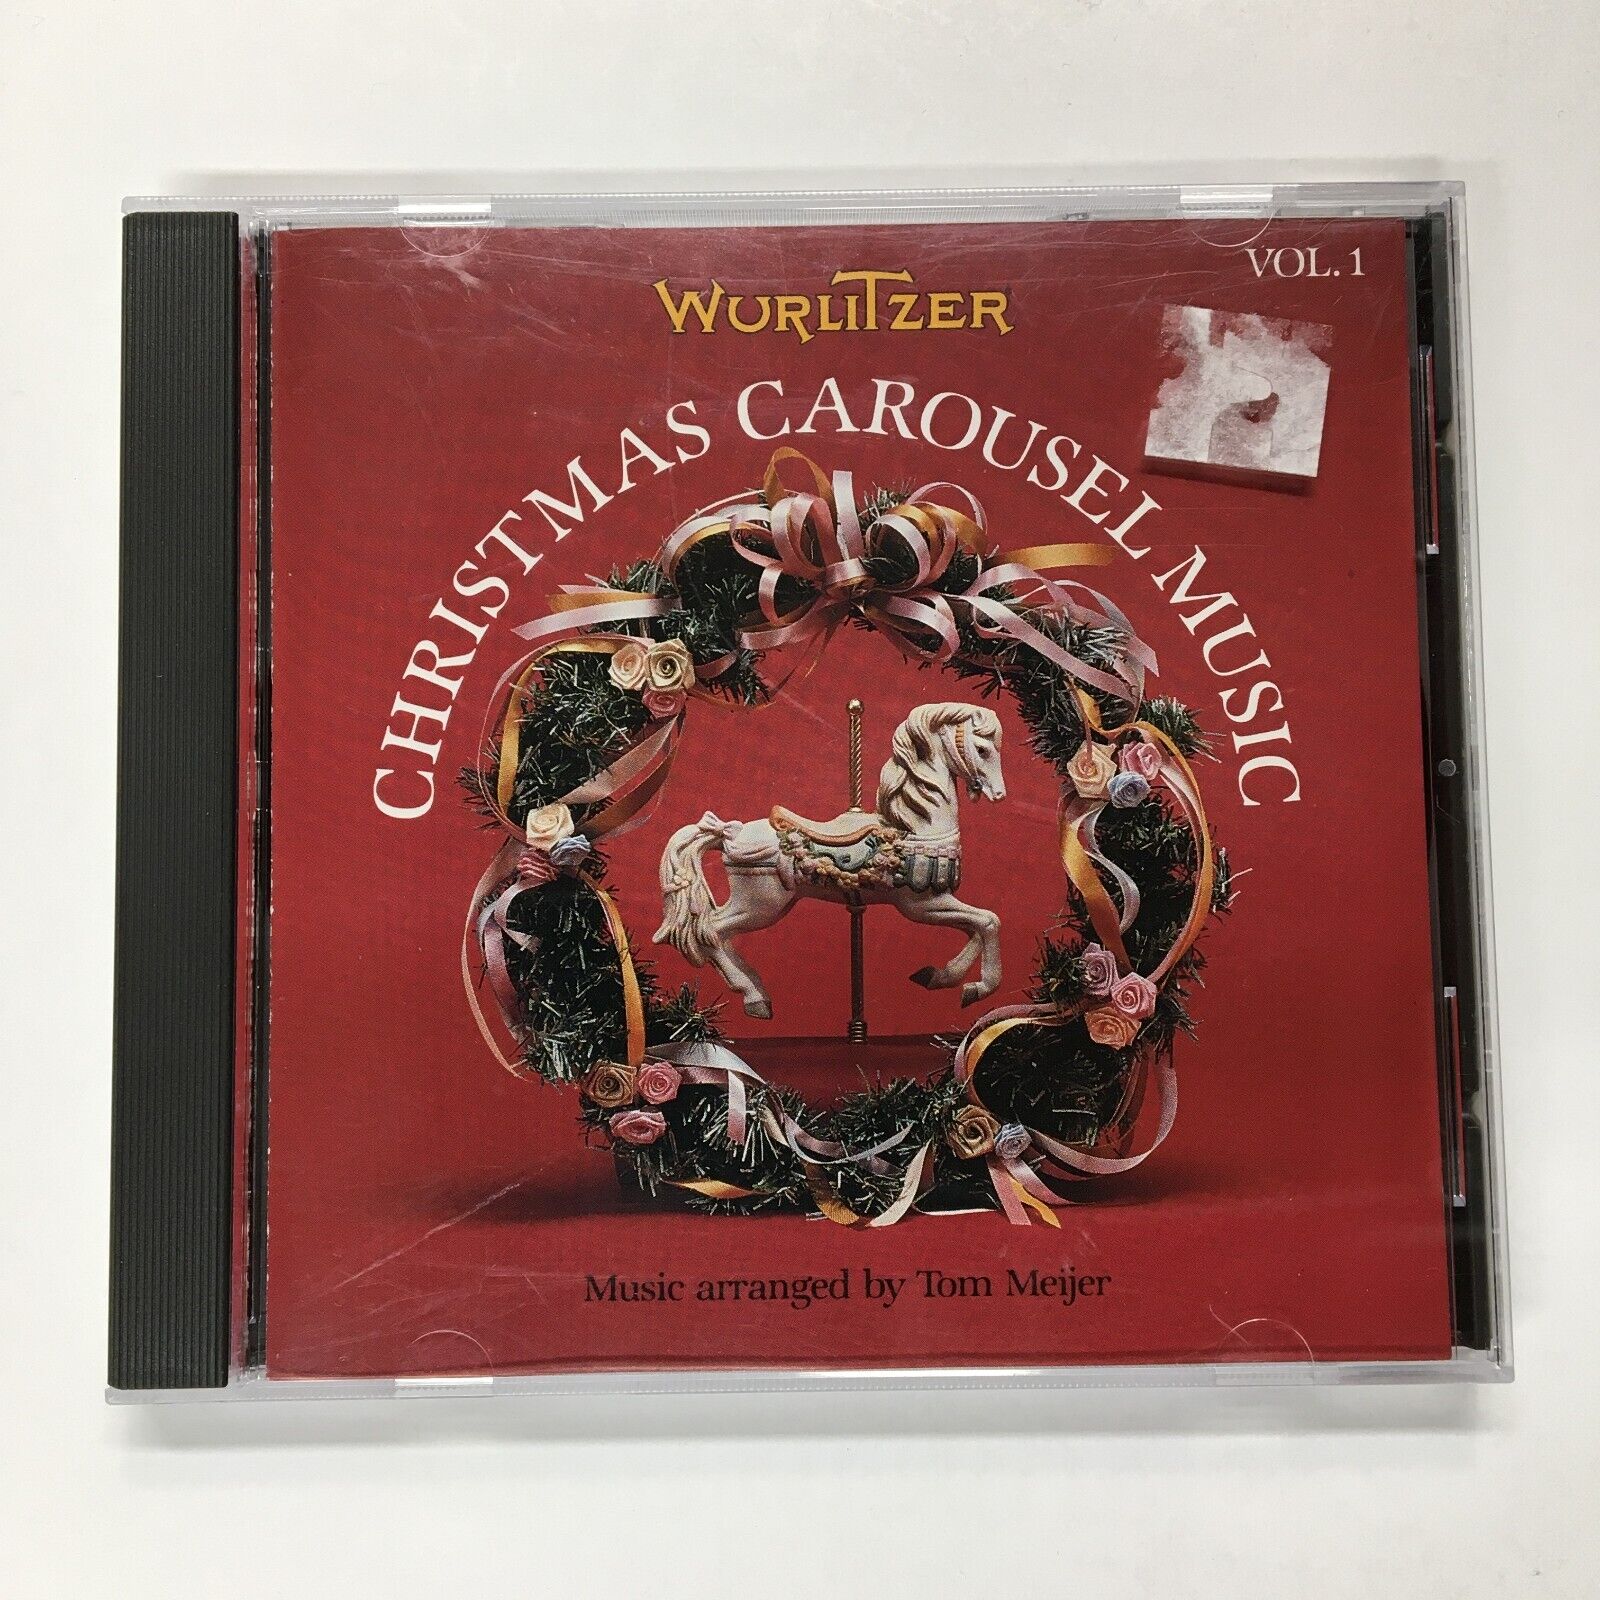 Wurlitzer Christmas Carousel Music: Vol. 1 by Tom Meijer (CD, Marion Roehl)